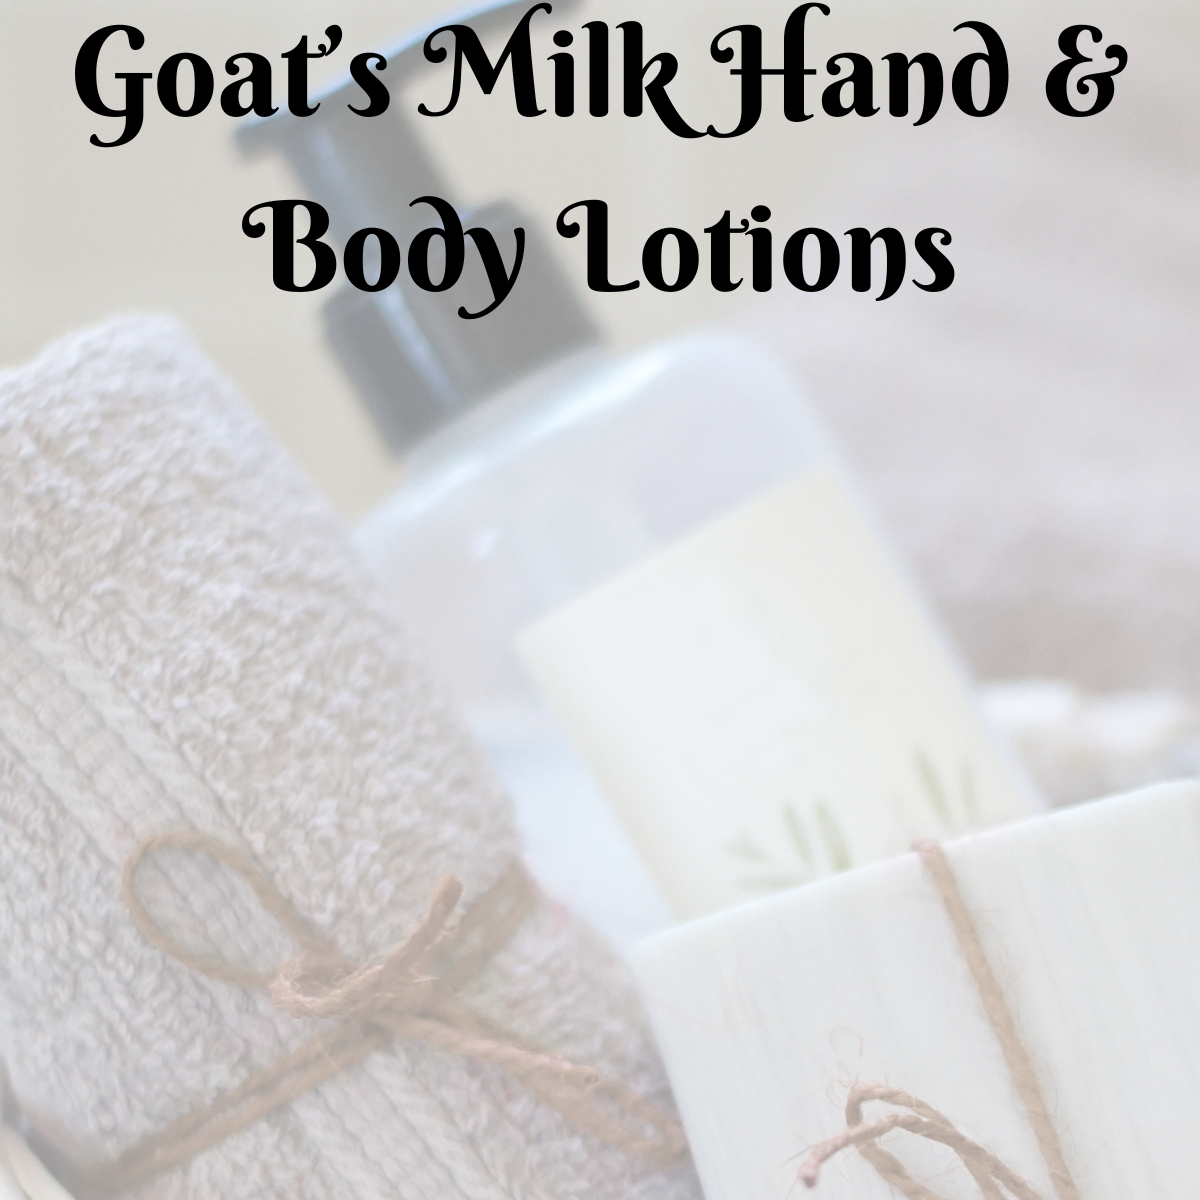 Goat's Milk Hand & Body Lotions